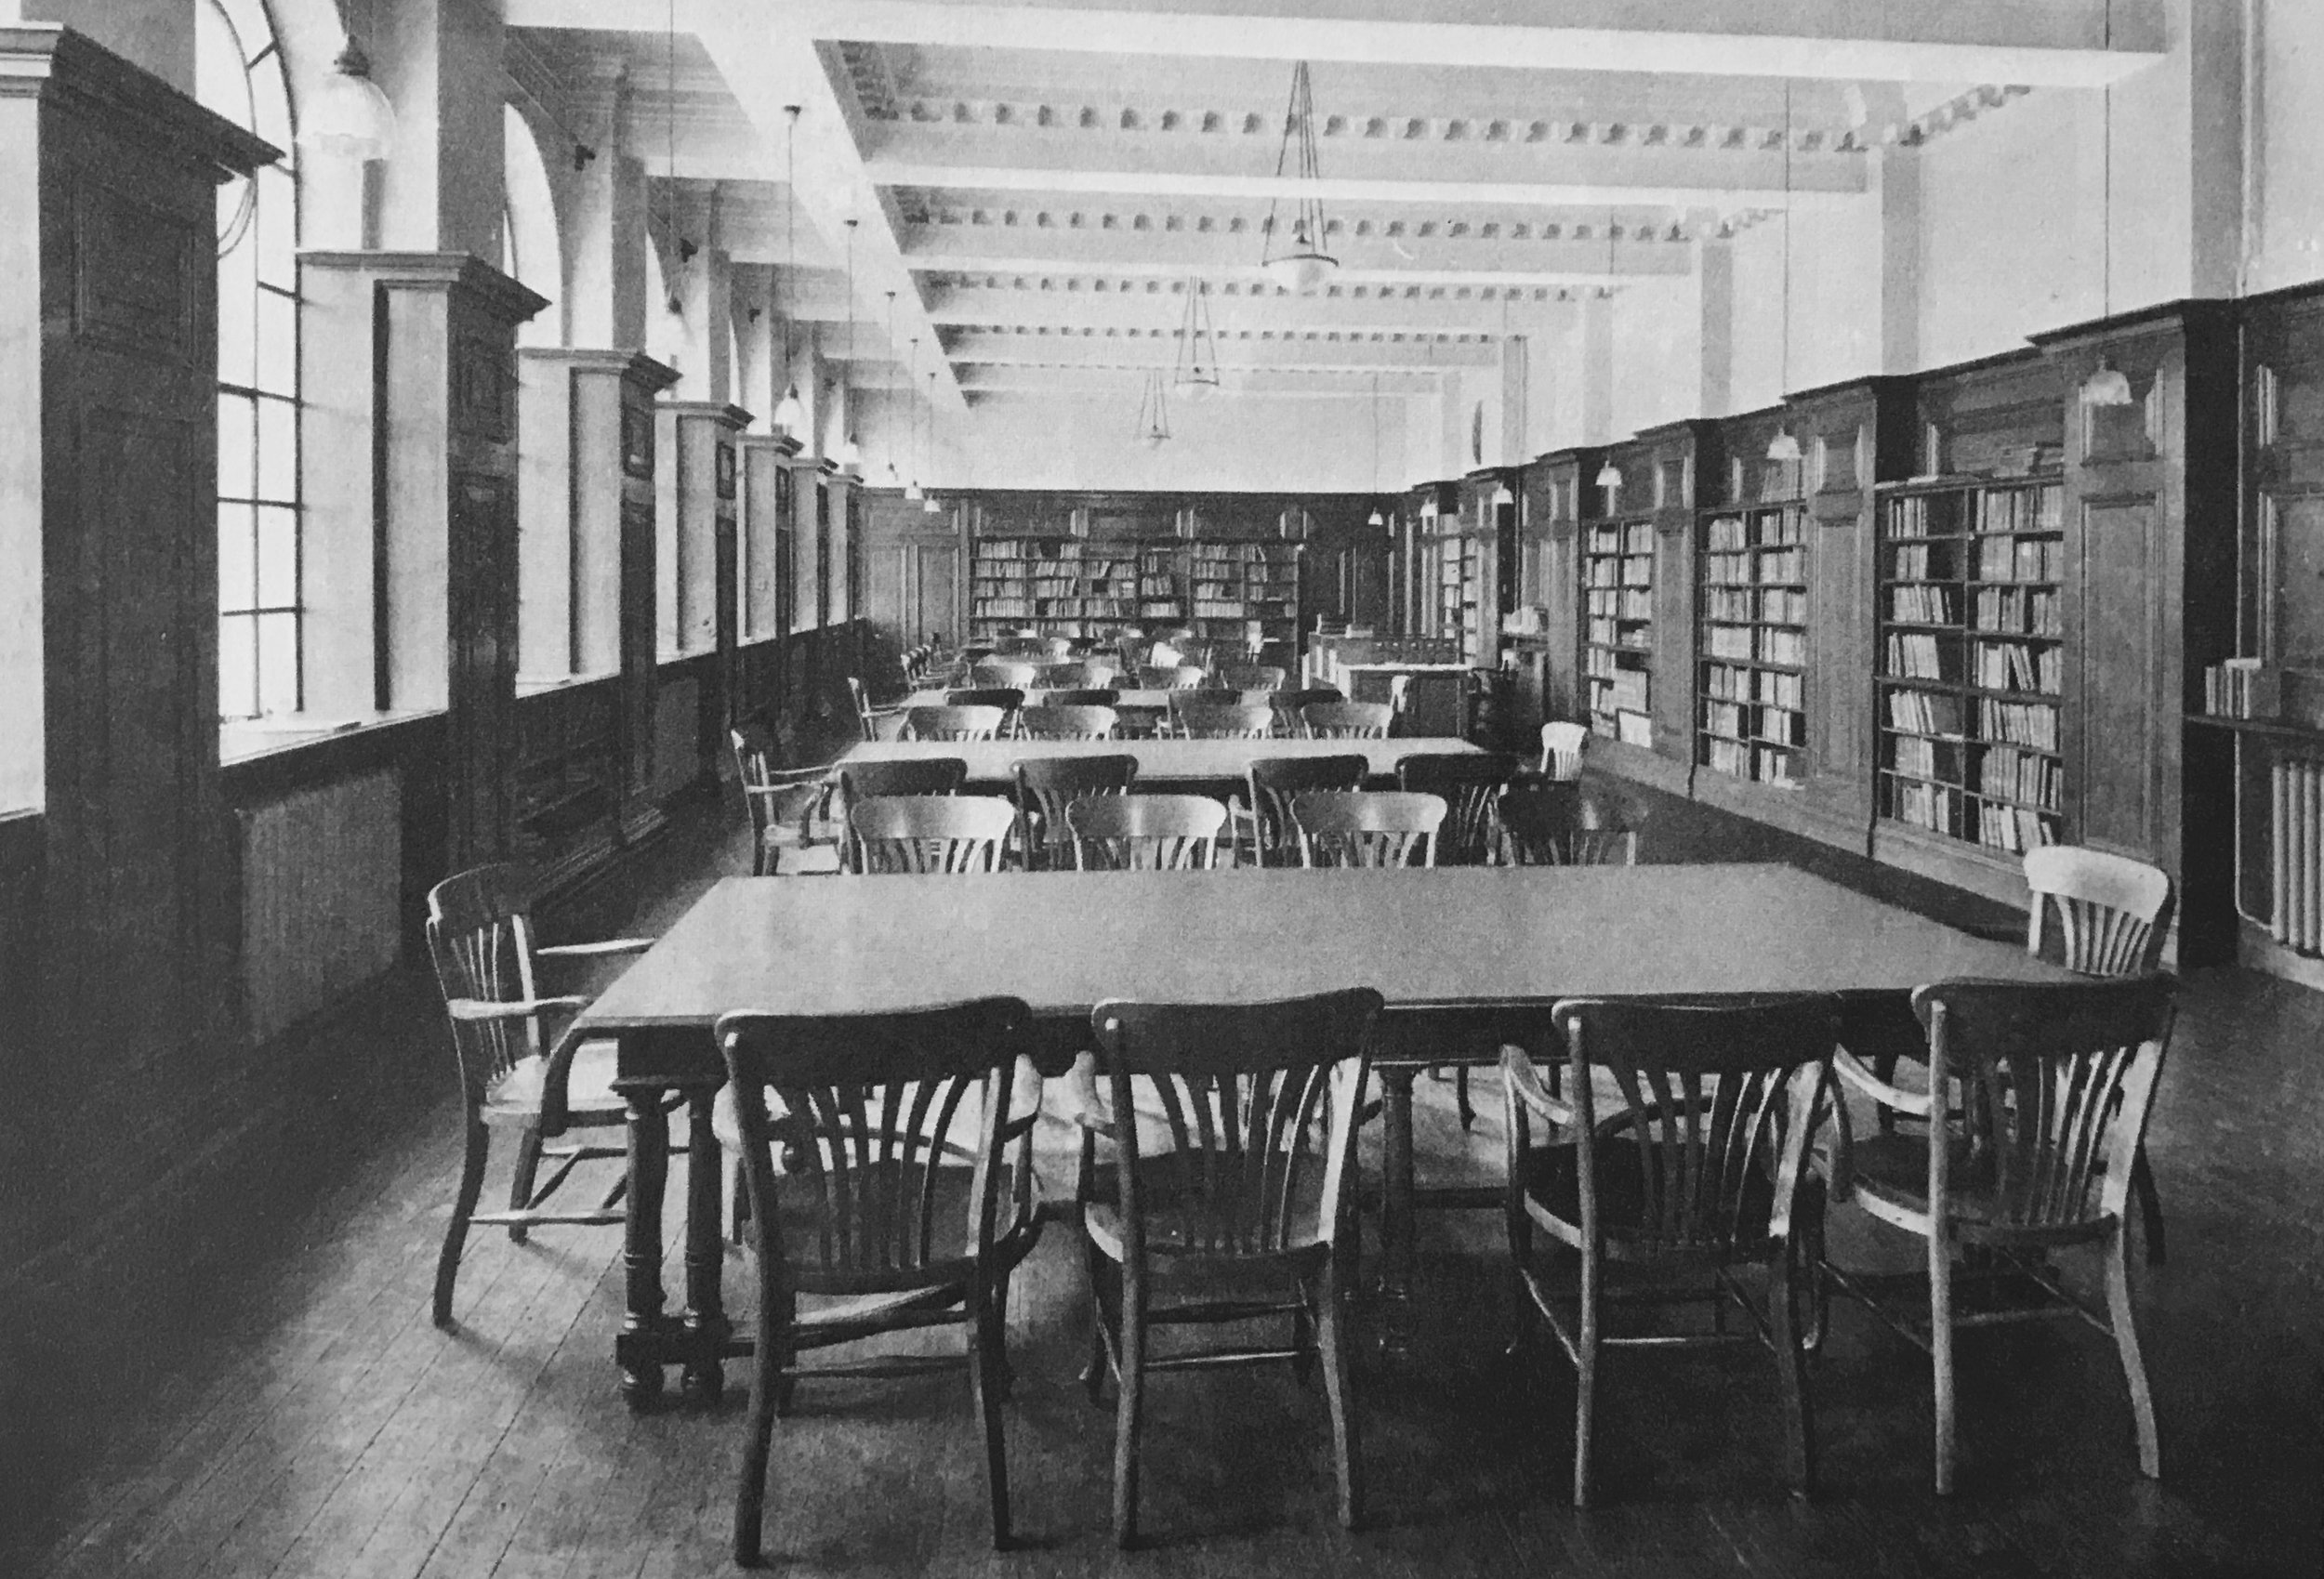 Original College Library, 1912